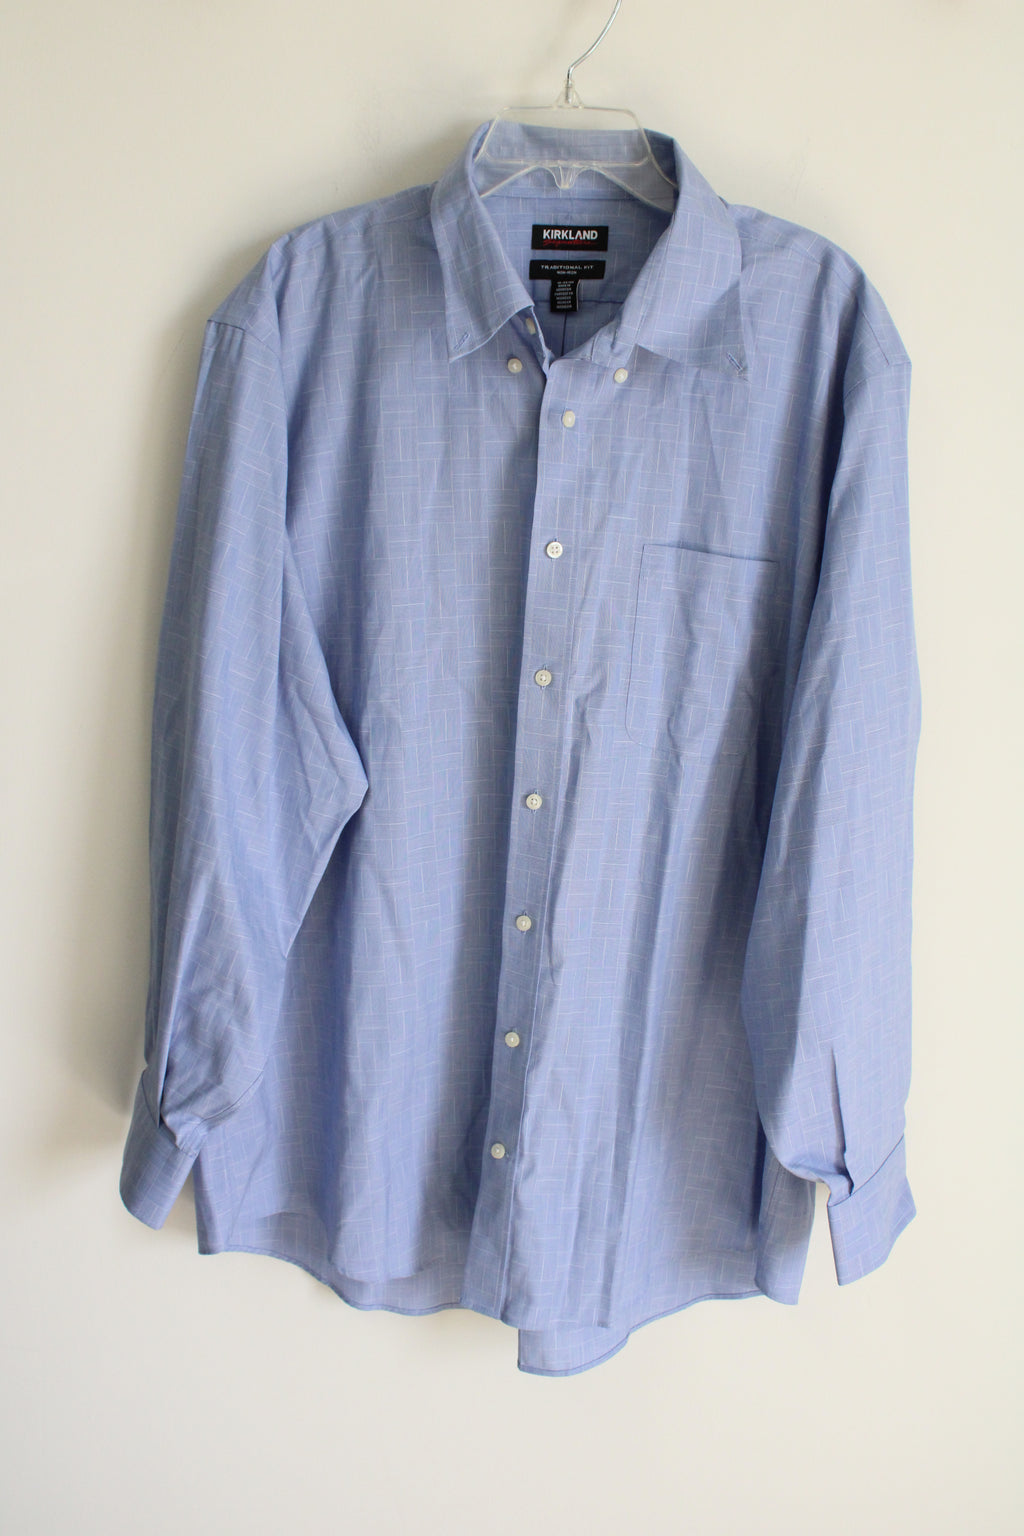 Kirkland Signature Blue Patterned Button Down Shirt | 18 34/35